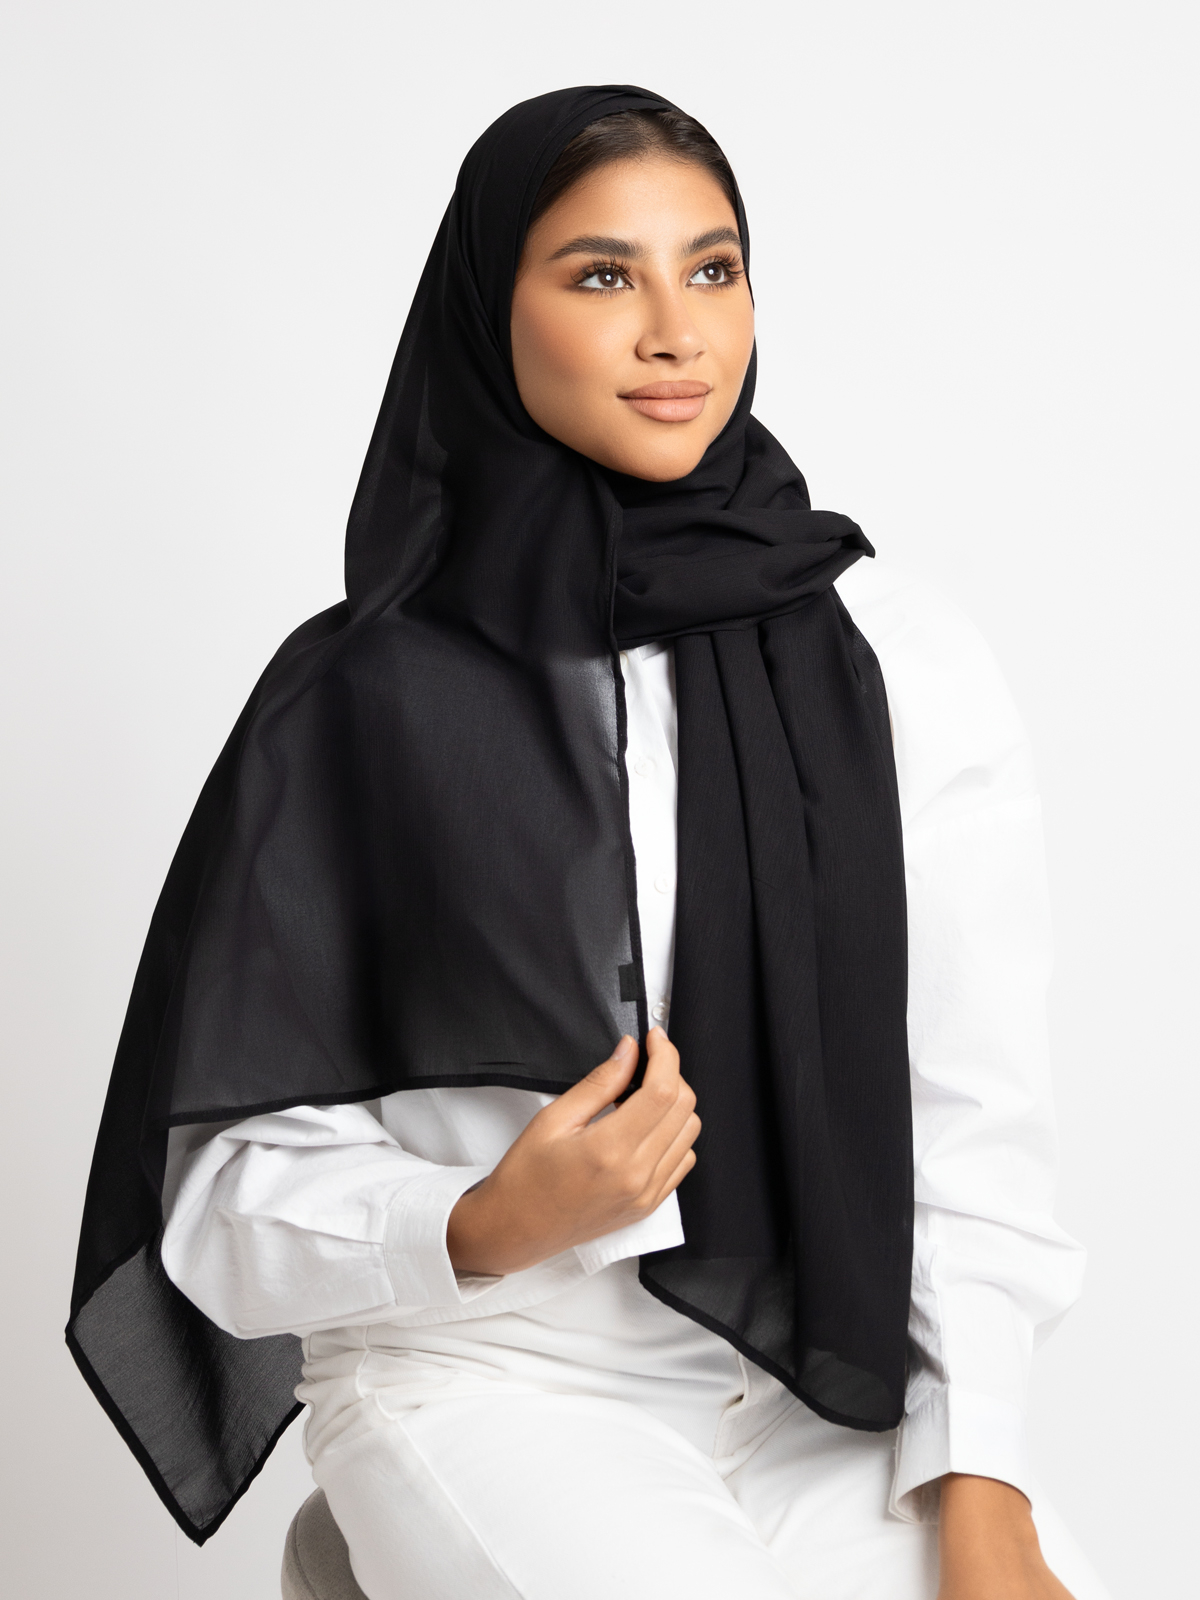 Luxurious chiffon hijab plain tarha 200 cm long black color high quality material online in ksa by kaafmeem